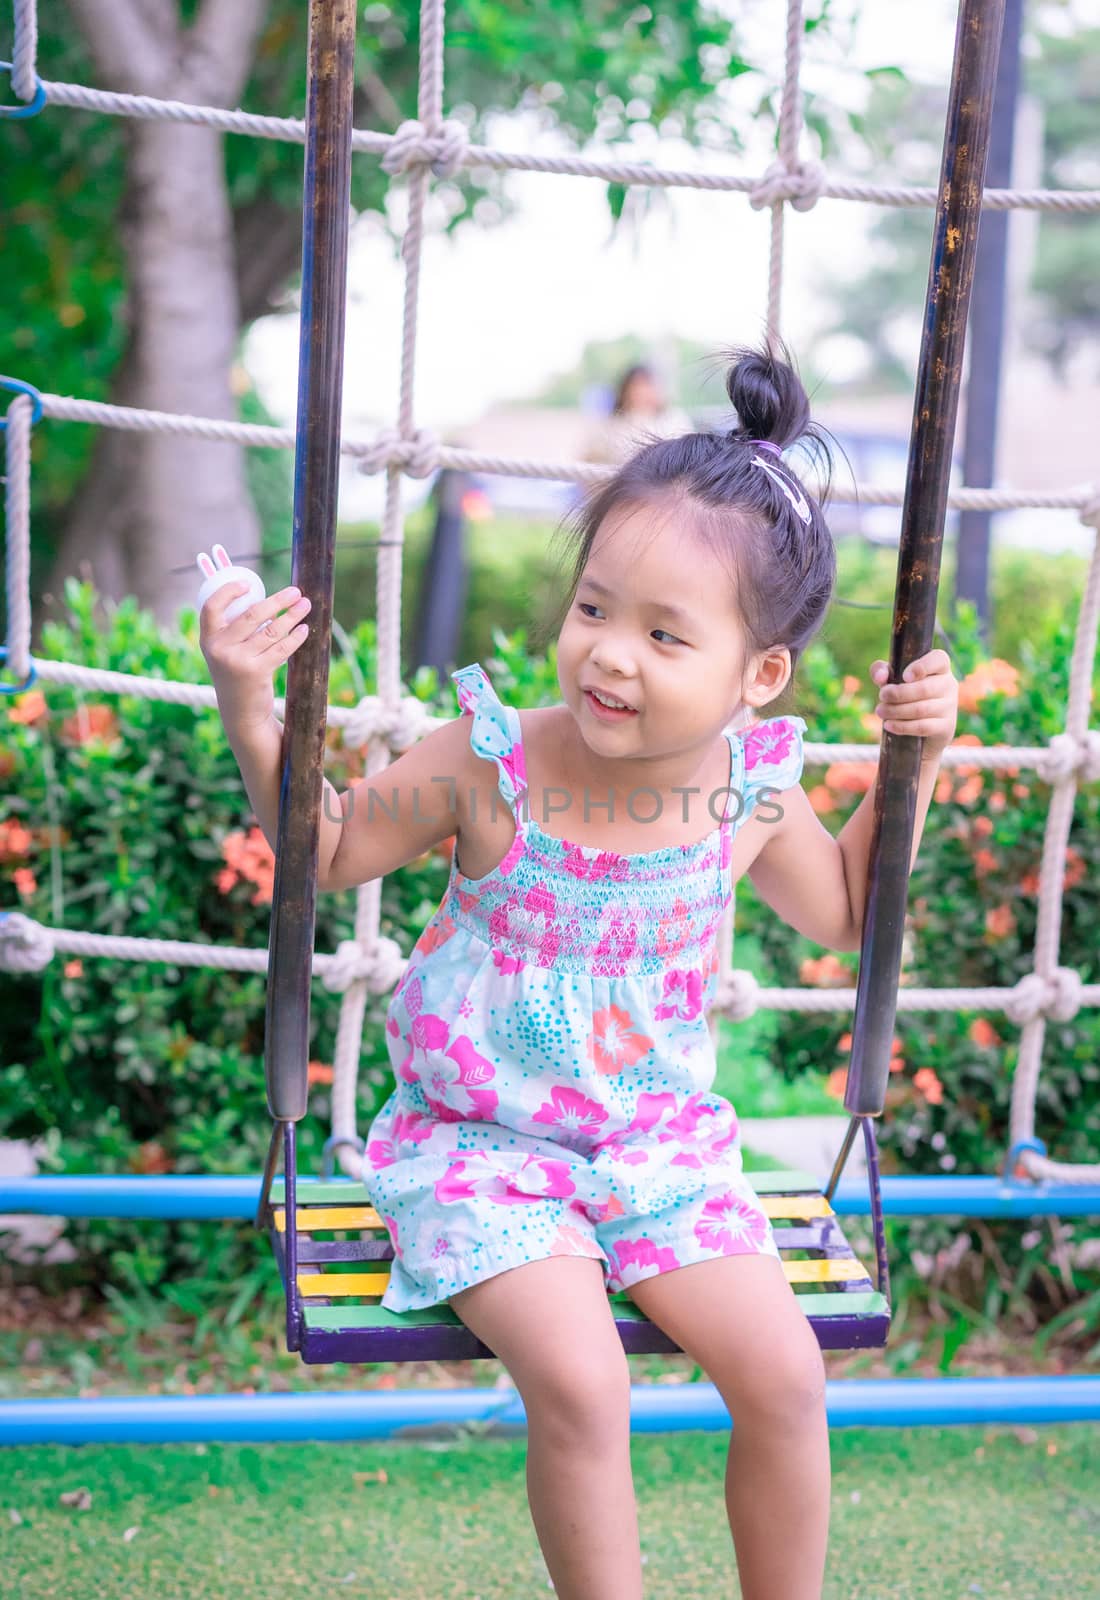 Little girl in dress sitting on a swing in the park by domonite